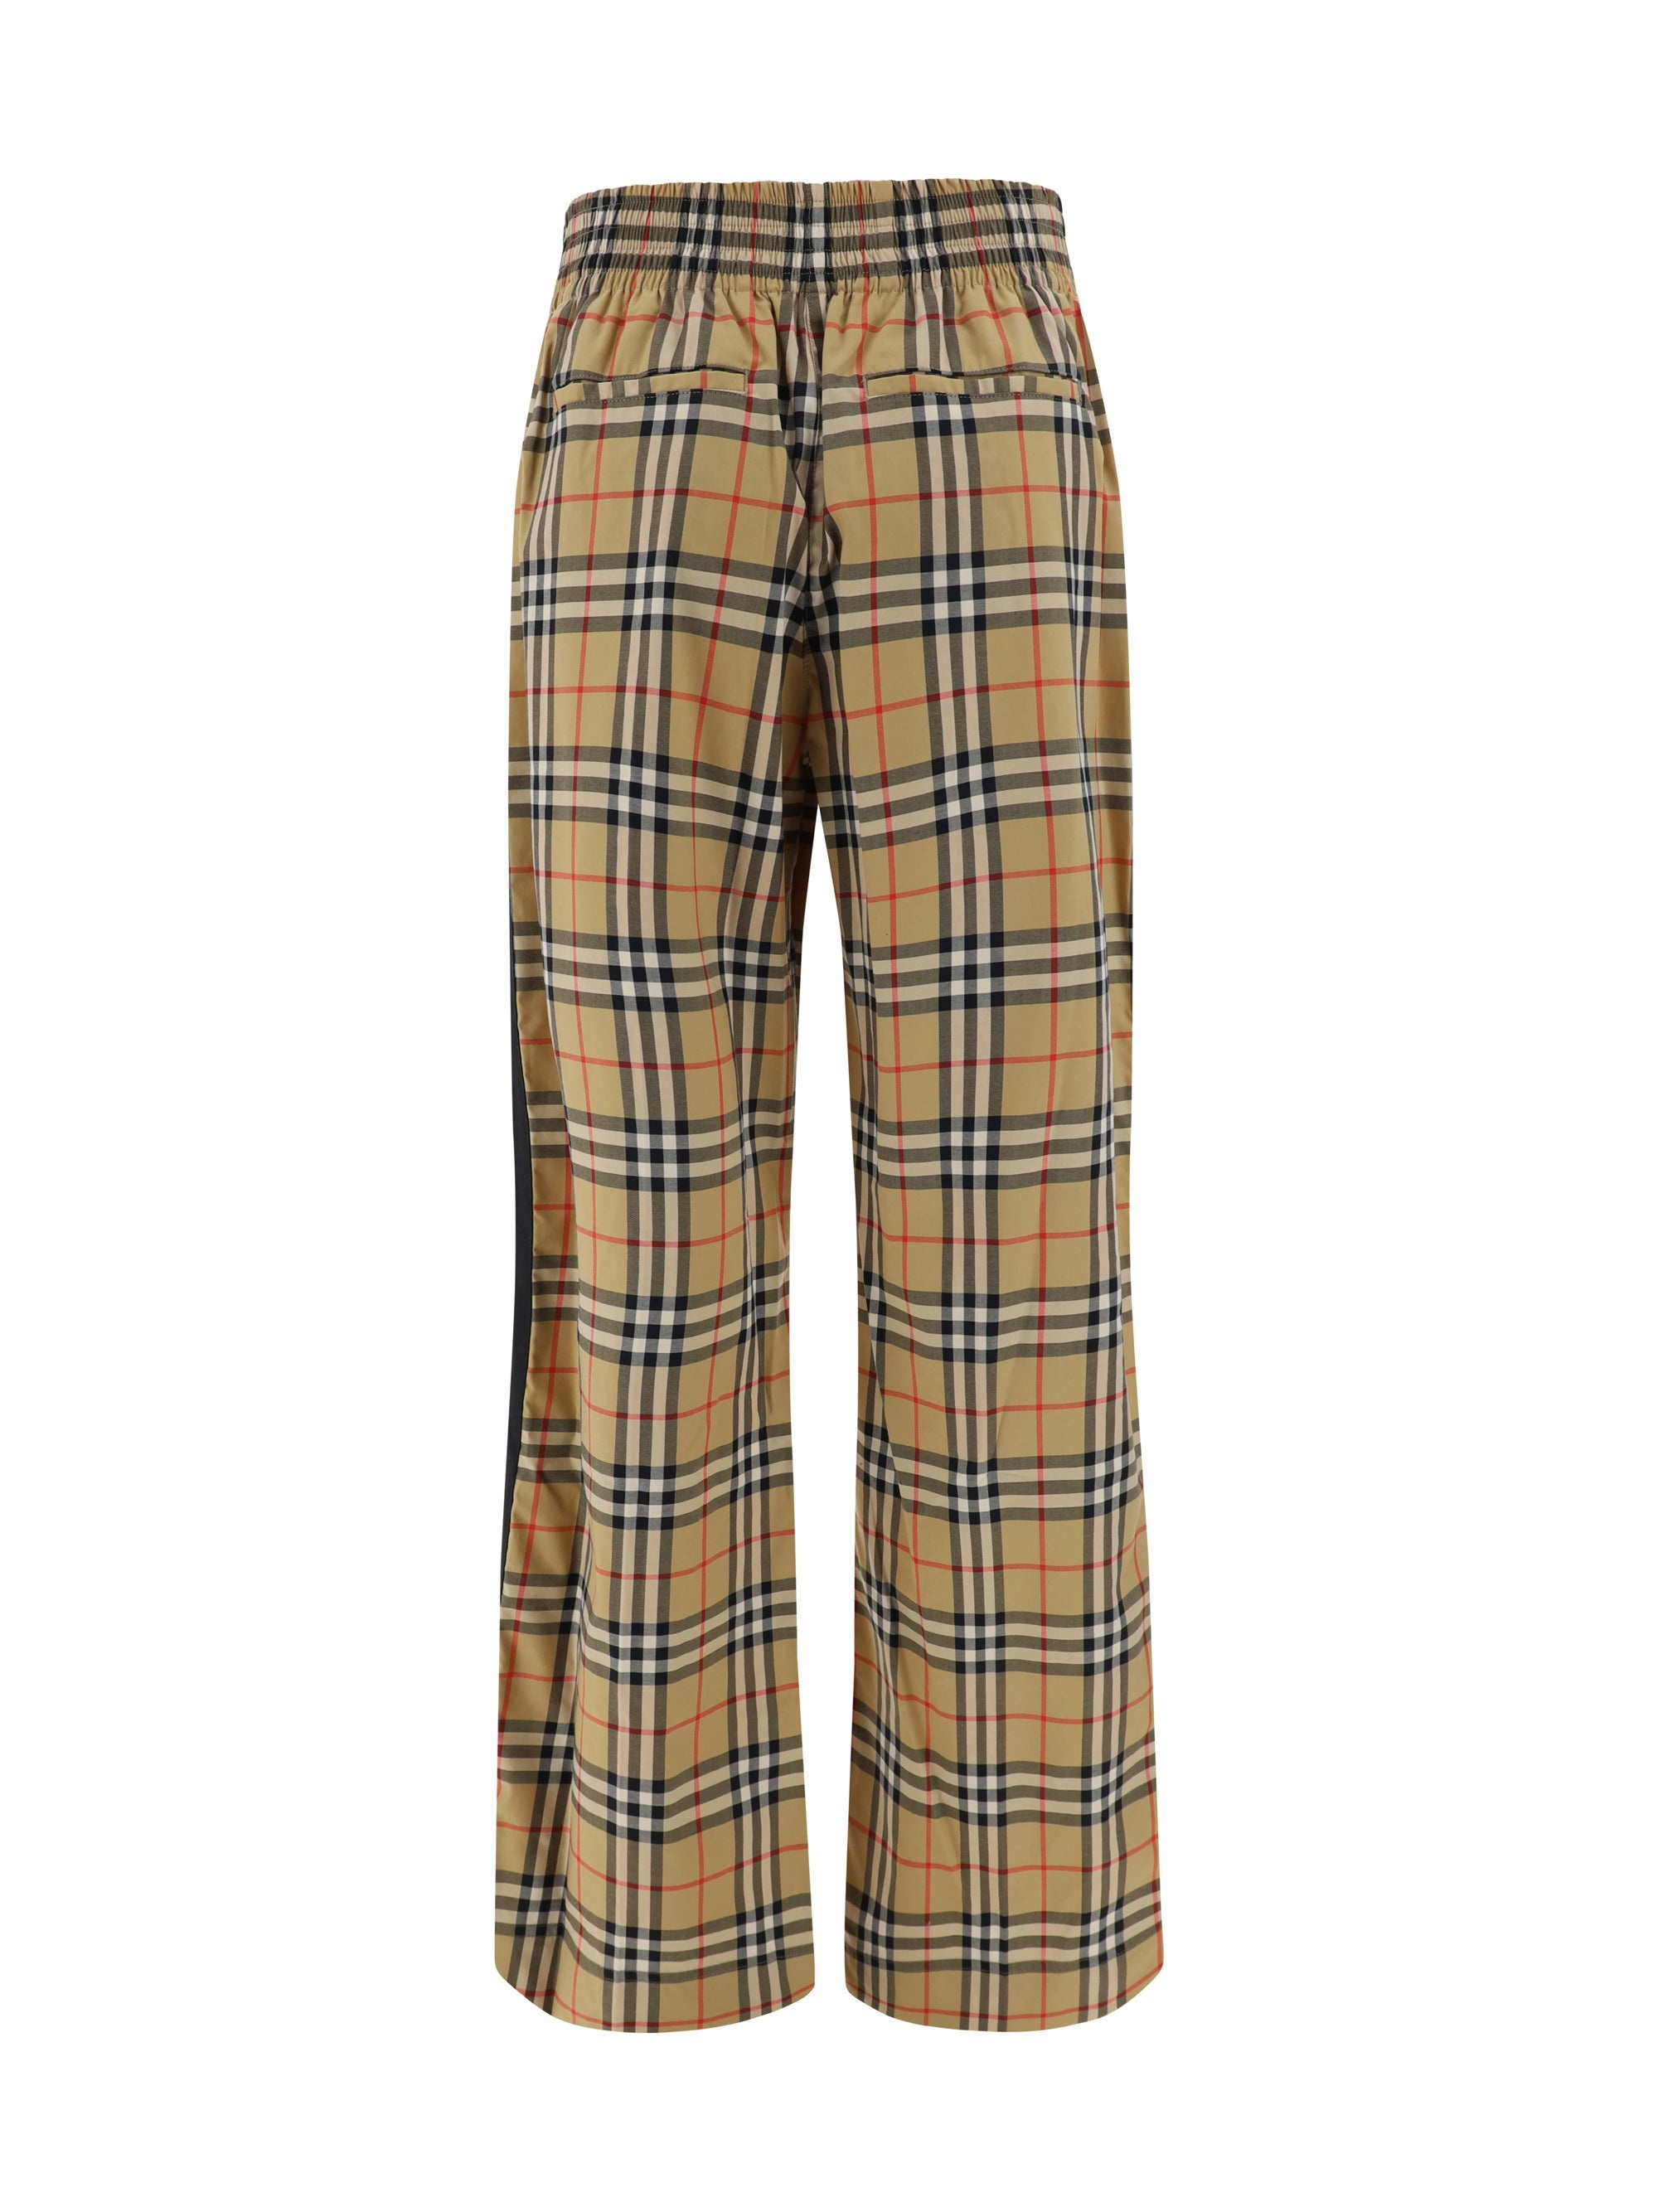 Burberry Women Pants - 2